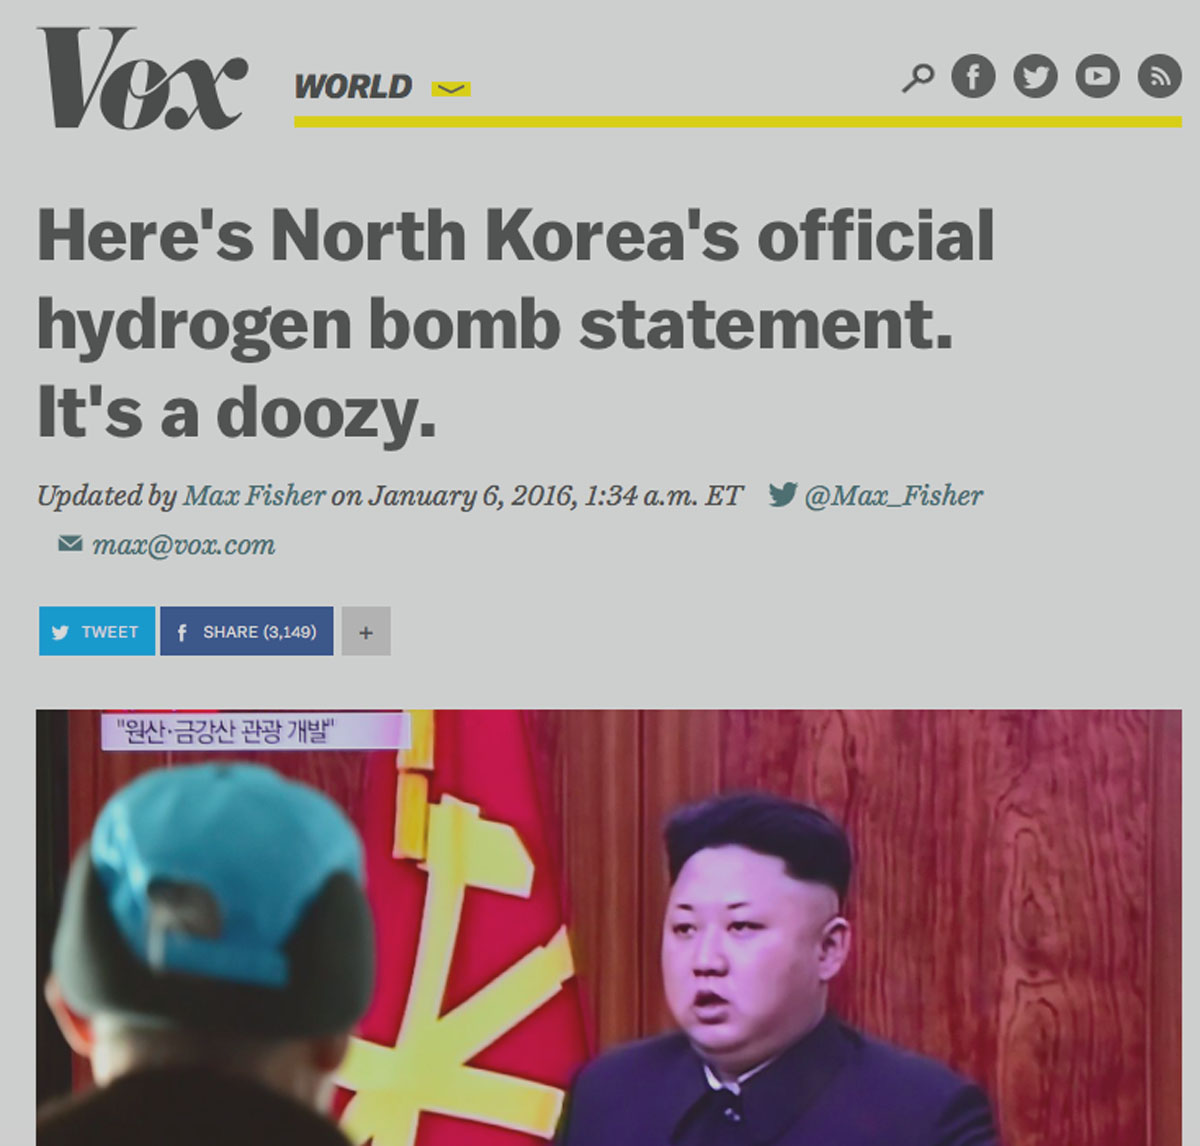 Vox headline about North Korea